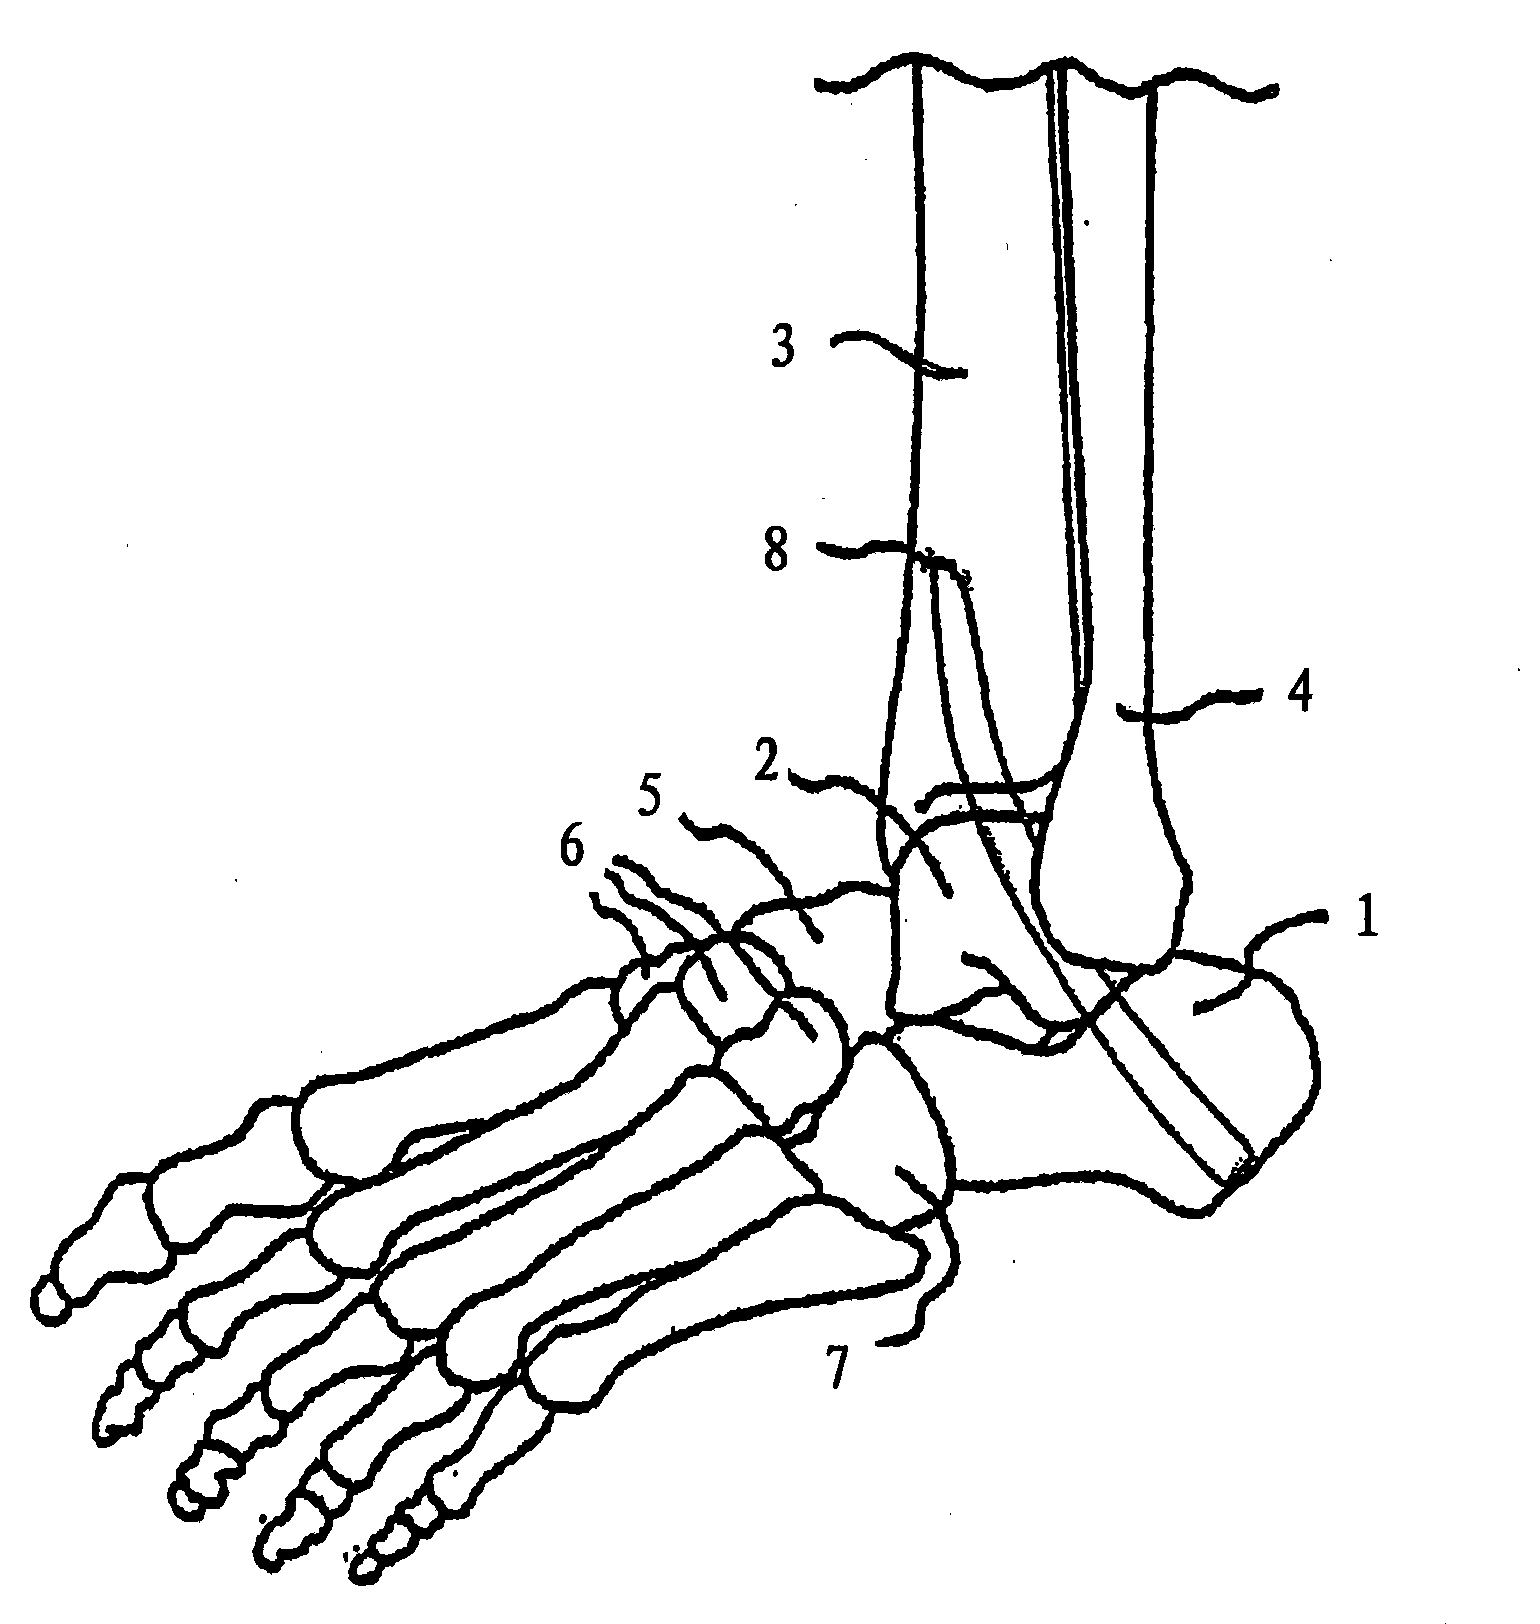 Bone nail for the heel